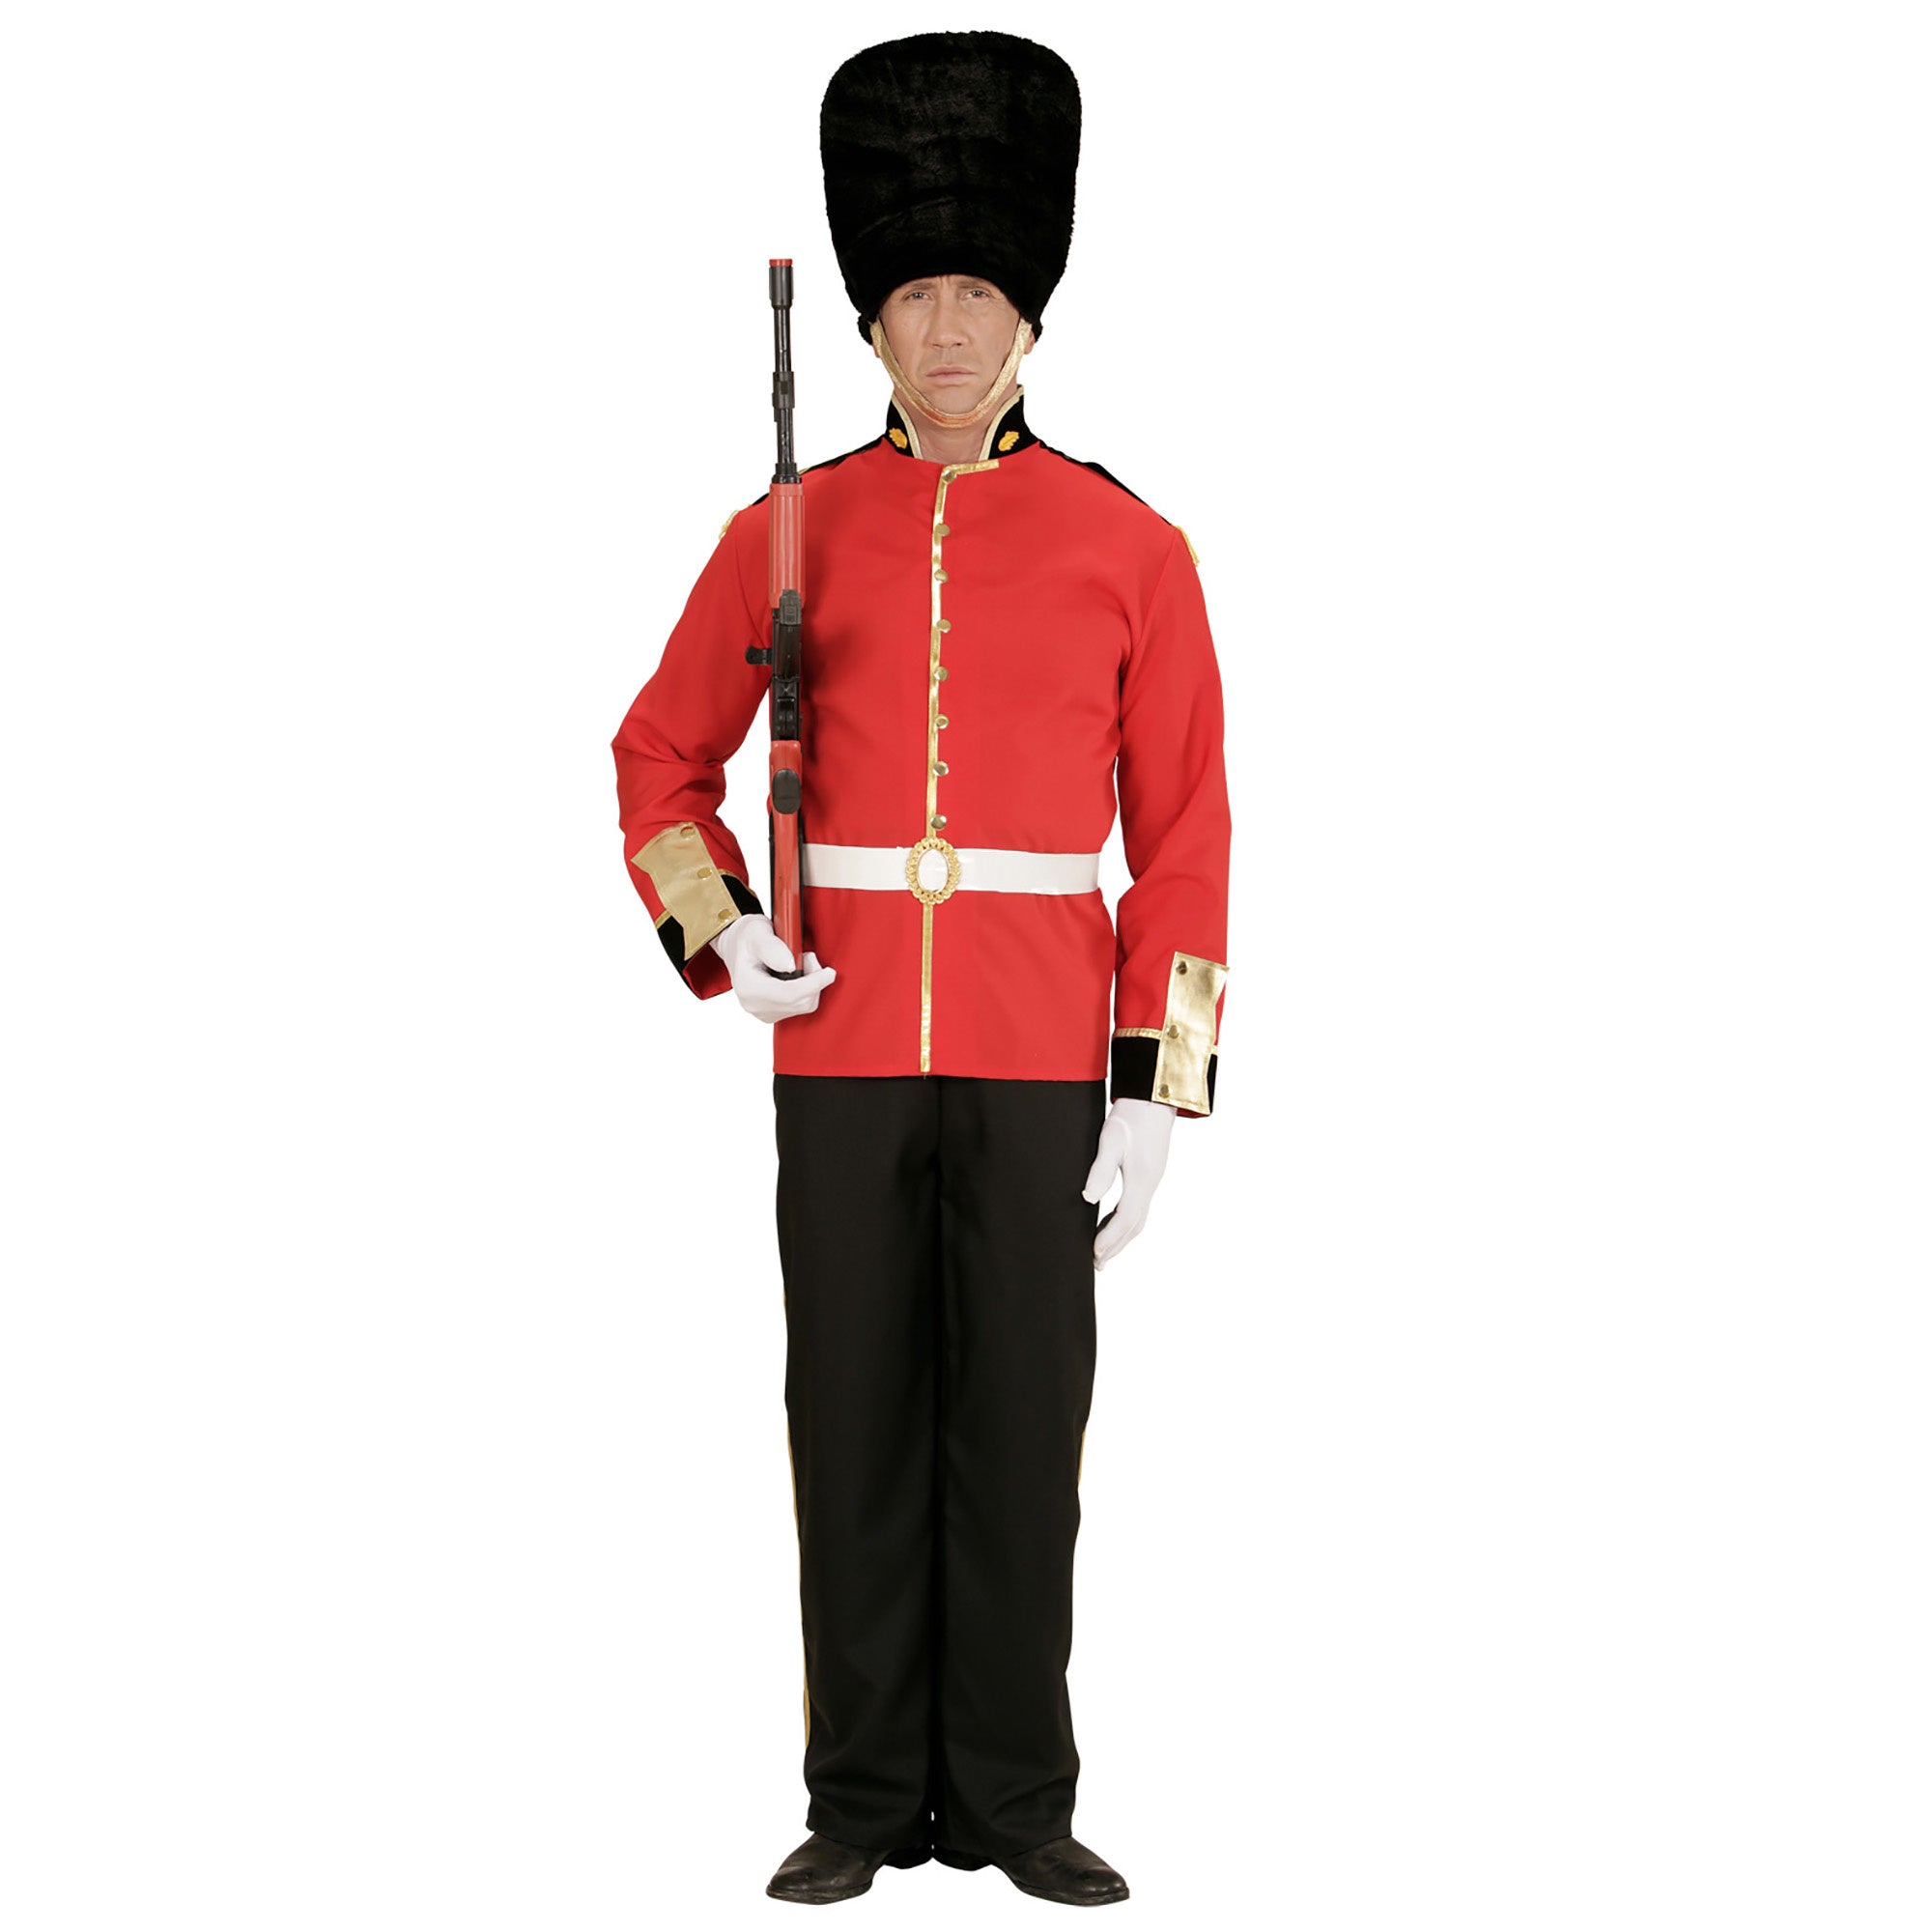 Widmann - Politie & Detective Kostuum - Beefeater Royal Guard - Man - Rood - Small - Carnavalskleding - Verkleedkleding